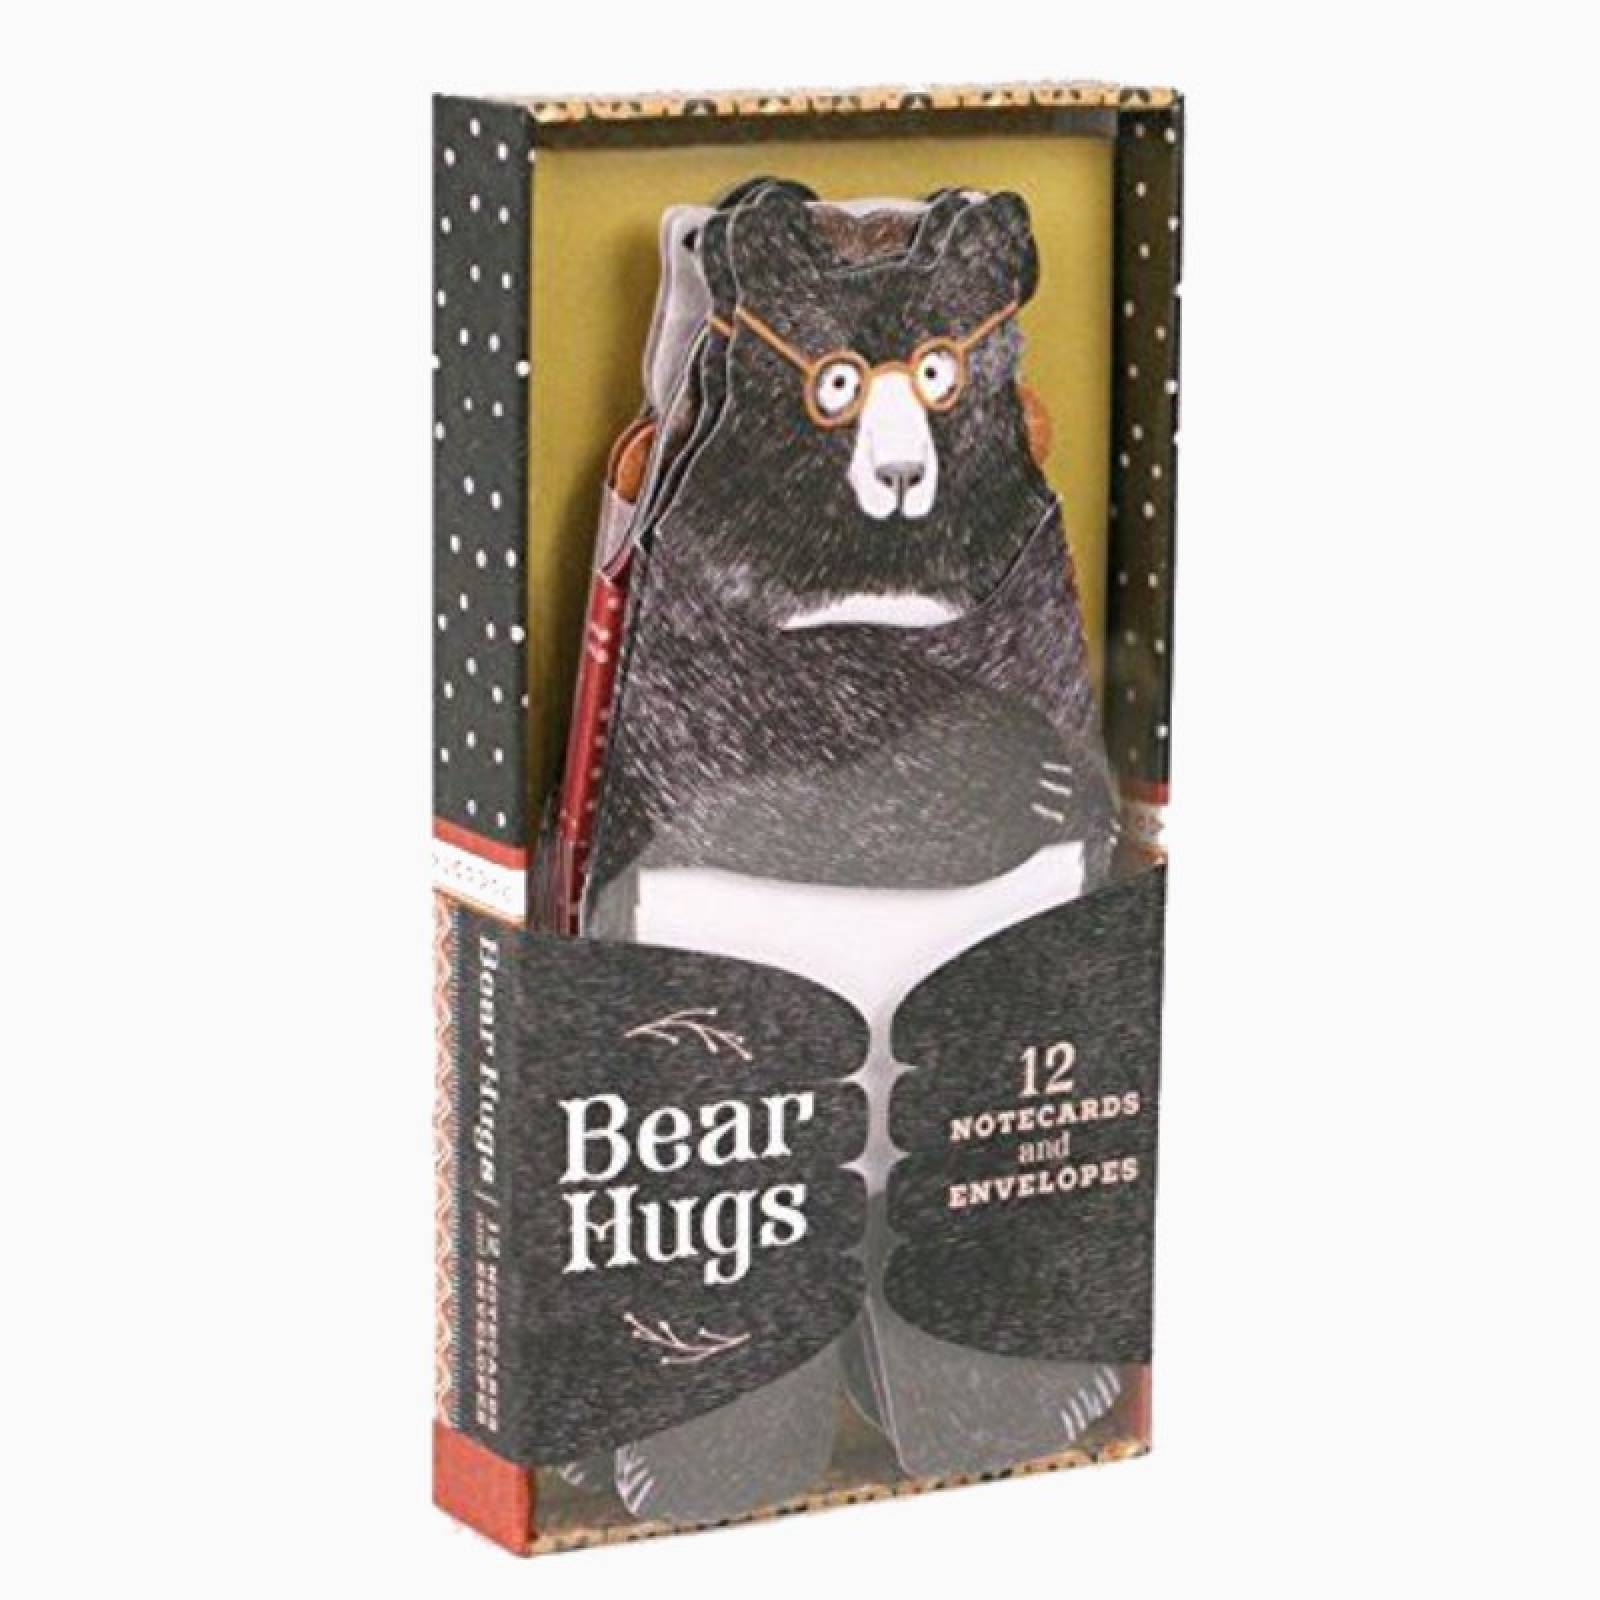 Bear Hugs - Set Of 12 Notecards & Envelopes